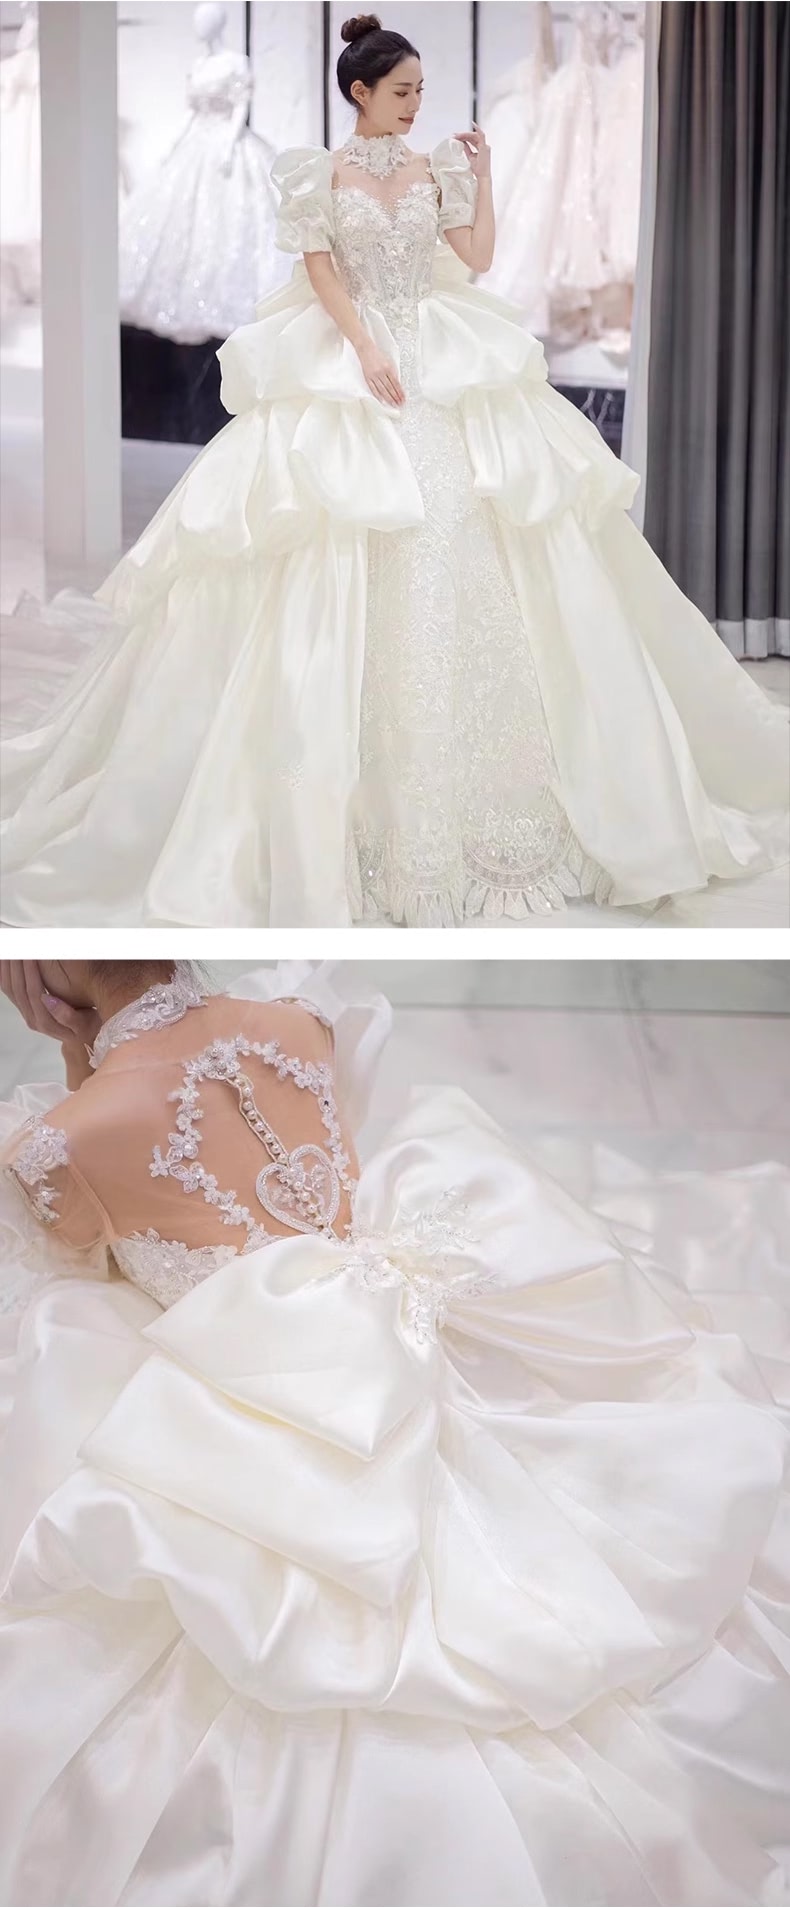 Retro-Princess-Embroidery-Puff-Sleeves-White-Satin-Bride-Wedding-Dress13